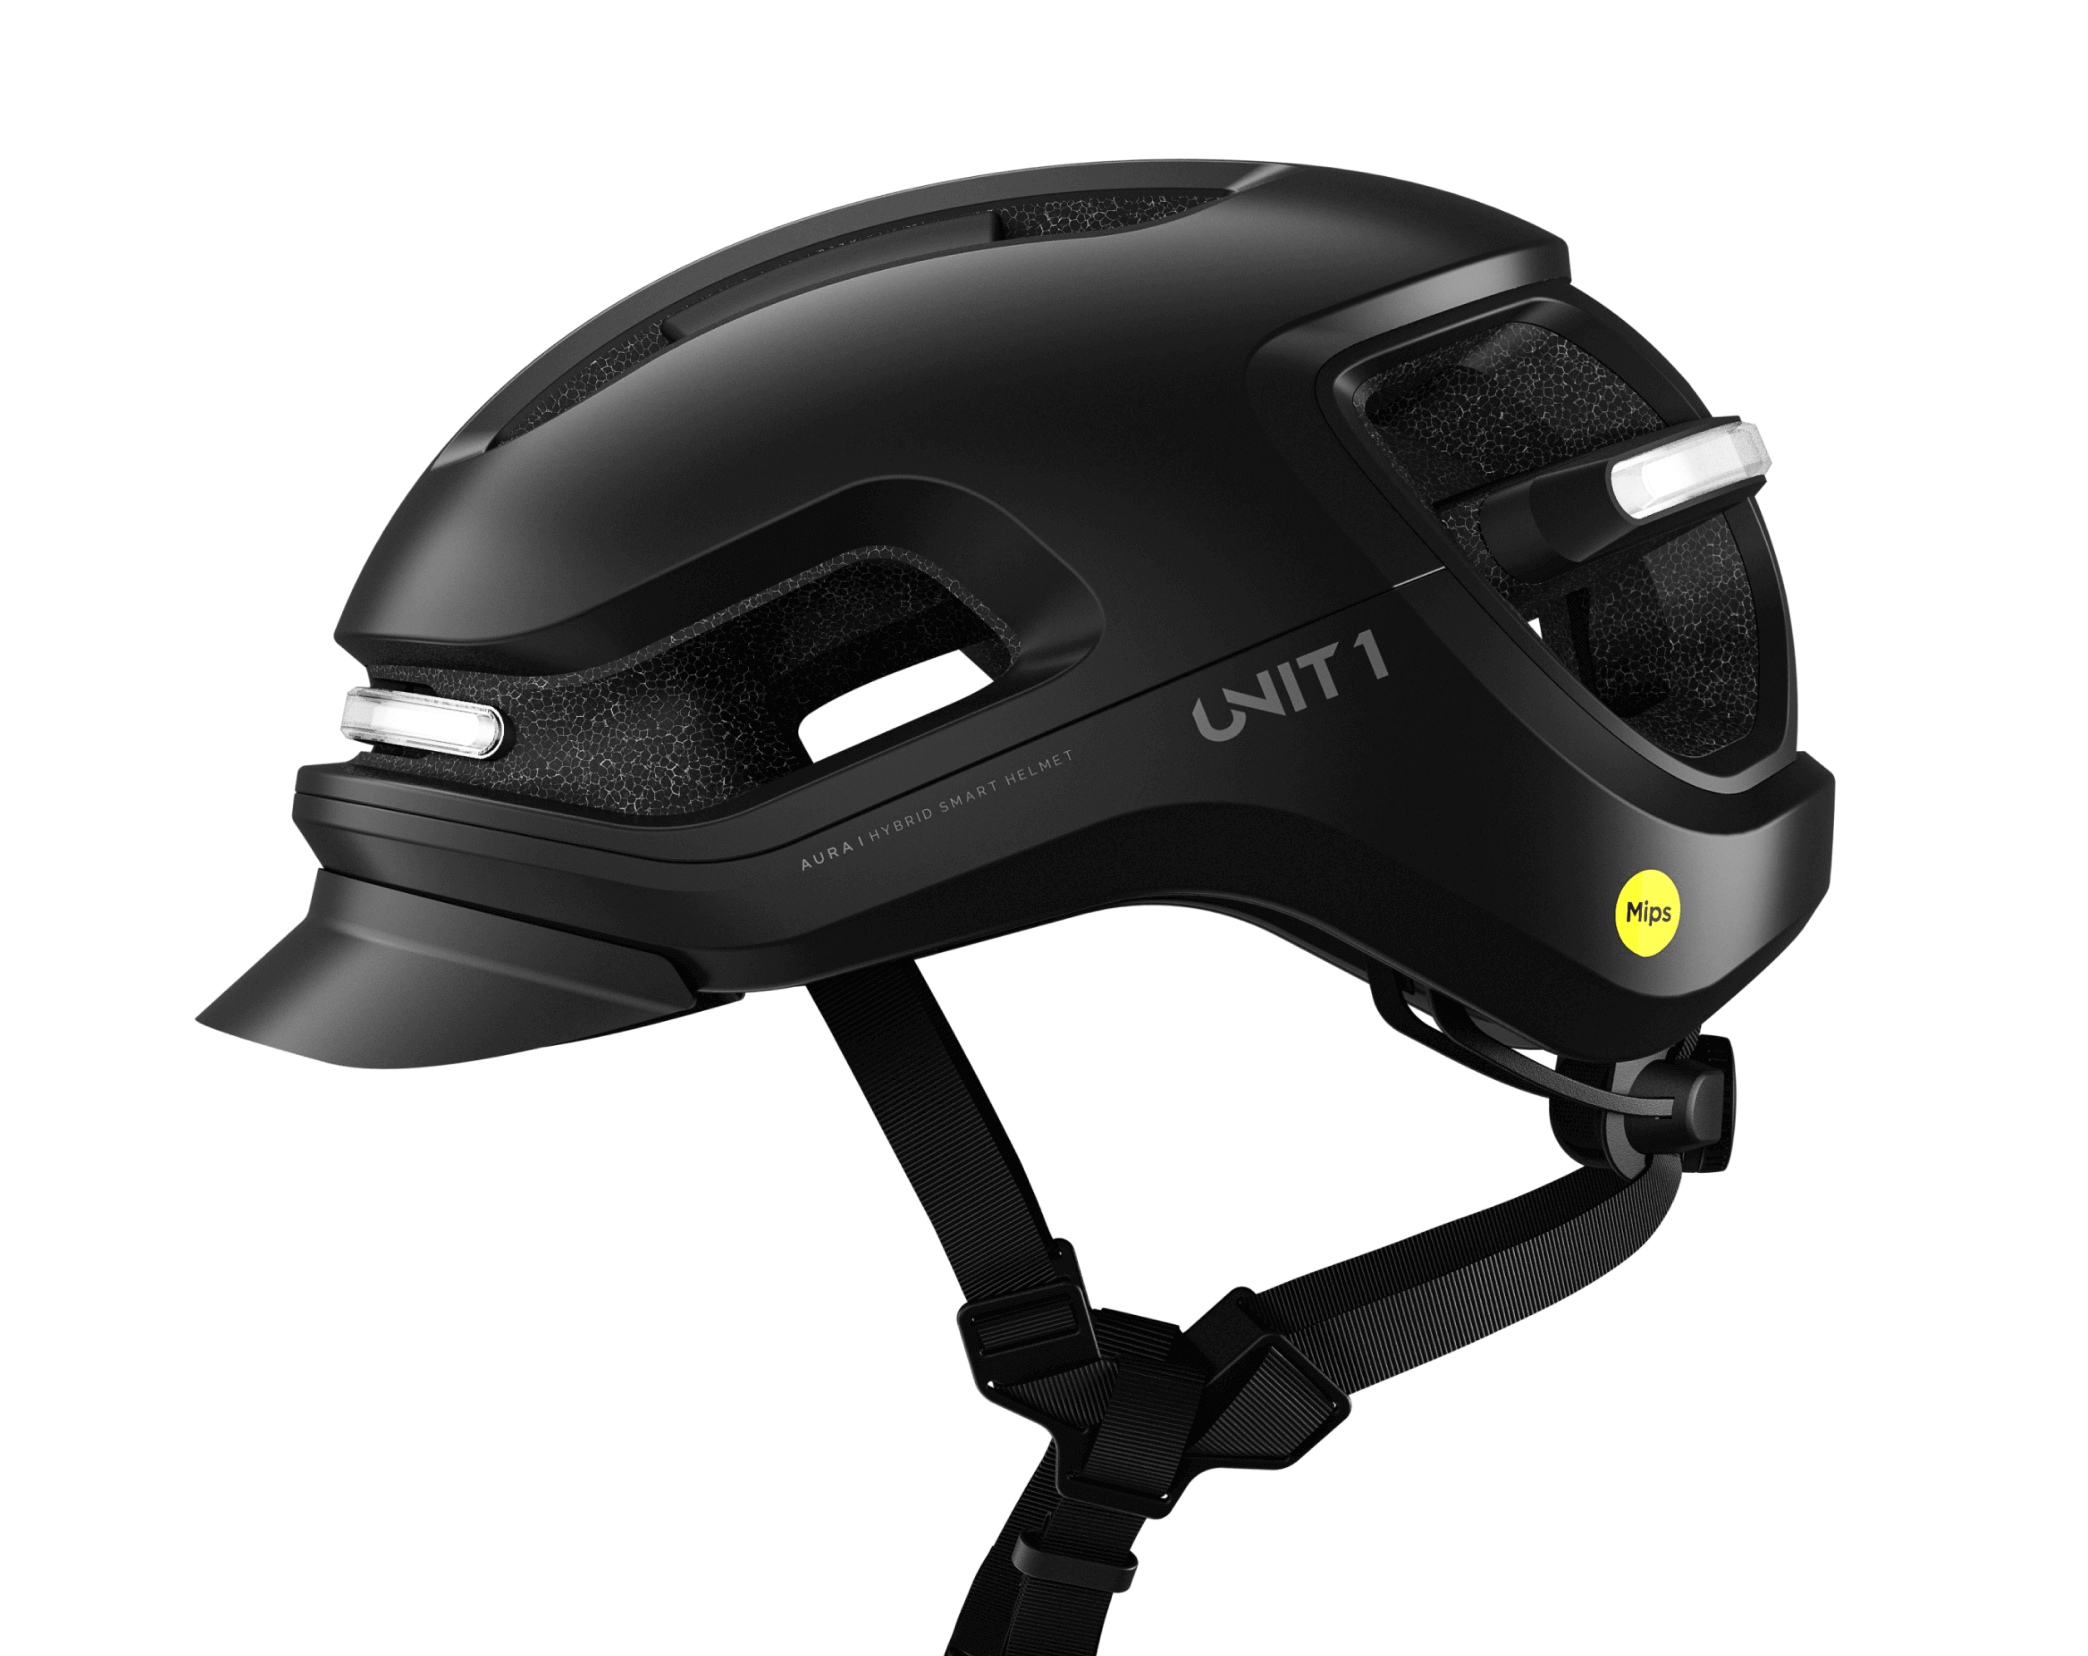 Black smart helmet with integrated lights on a black background.